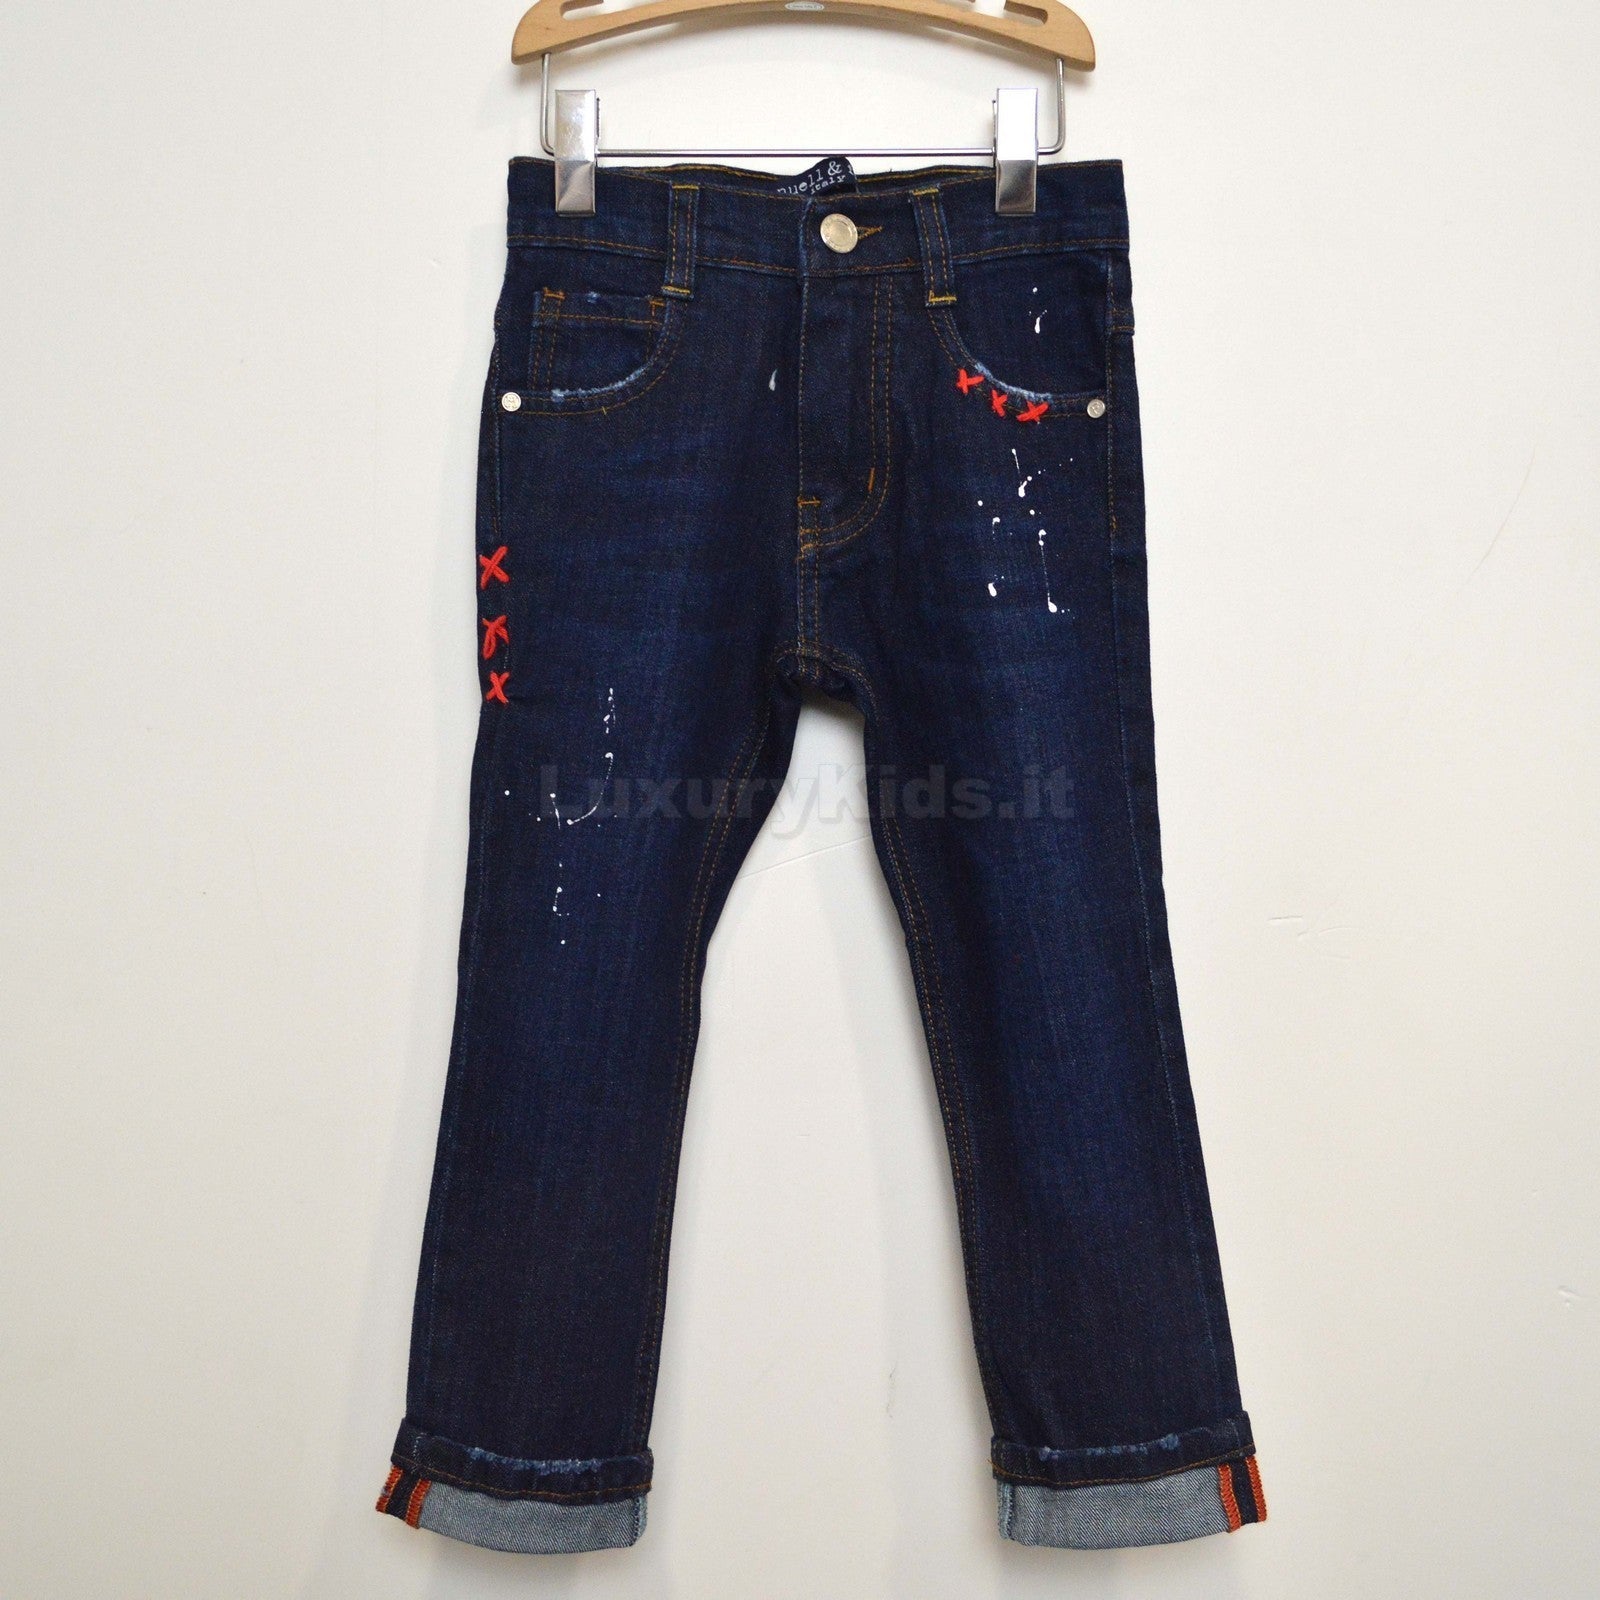 Jeans Scuro in Caldo Cotone Denim con Macchie di Pittura per Bambino Manuell&Frank MF1015N - MANUELL&FRANK - LuxuryKids